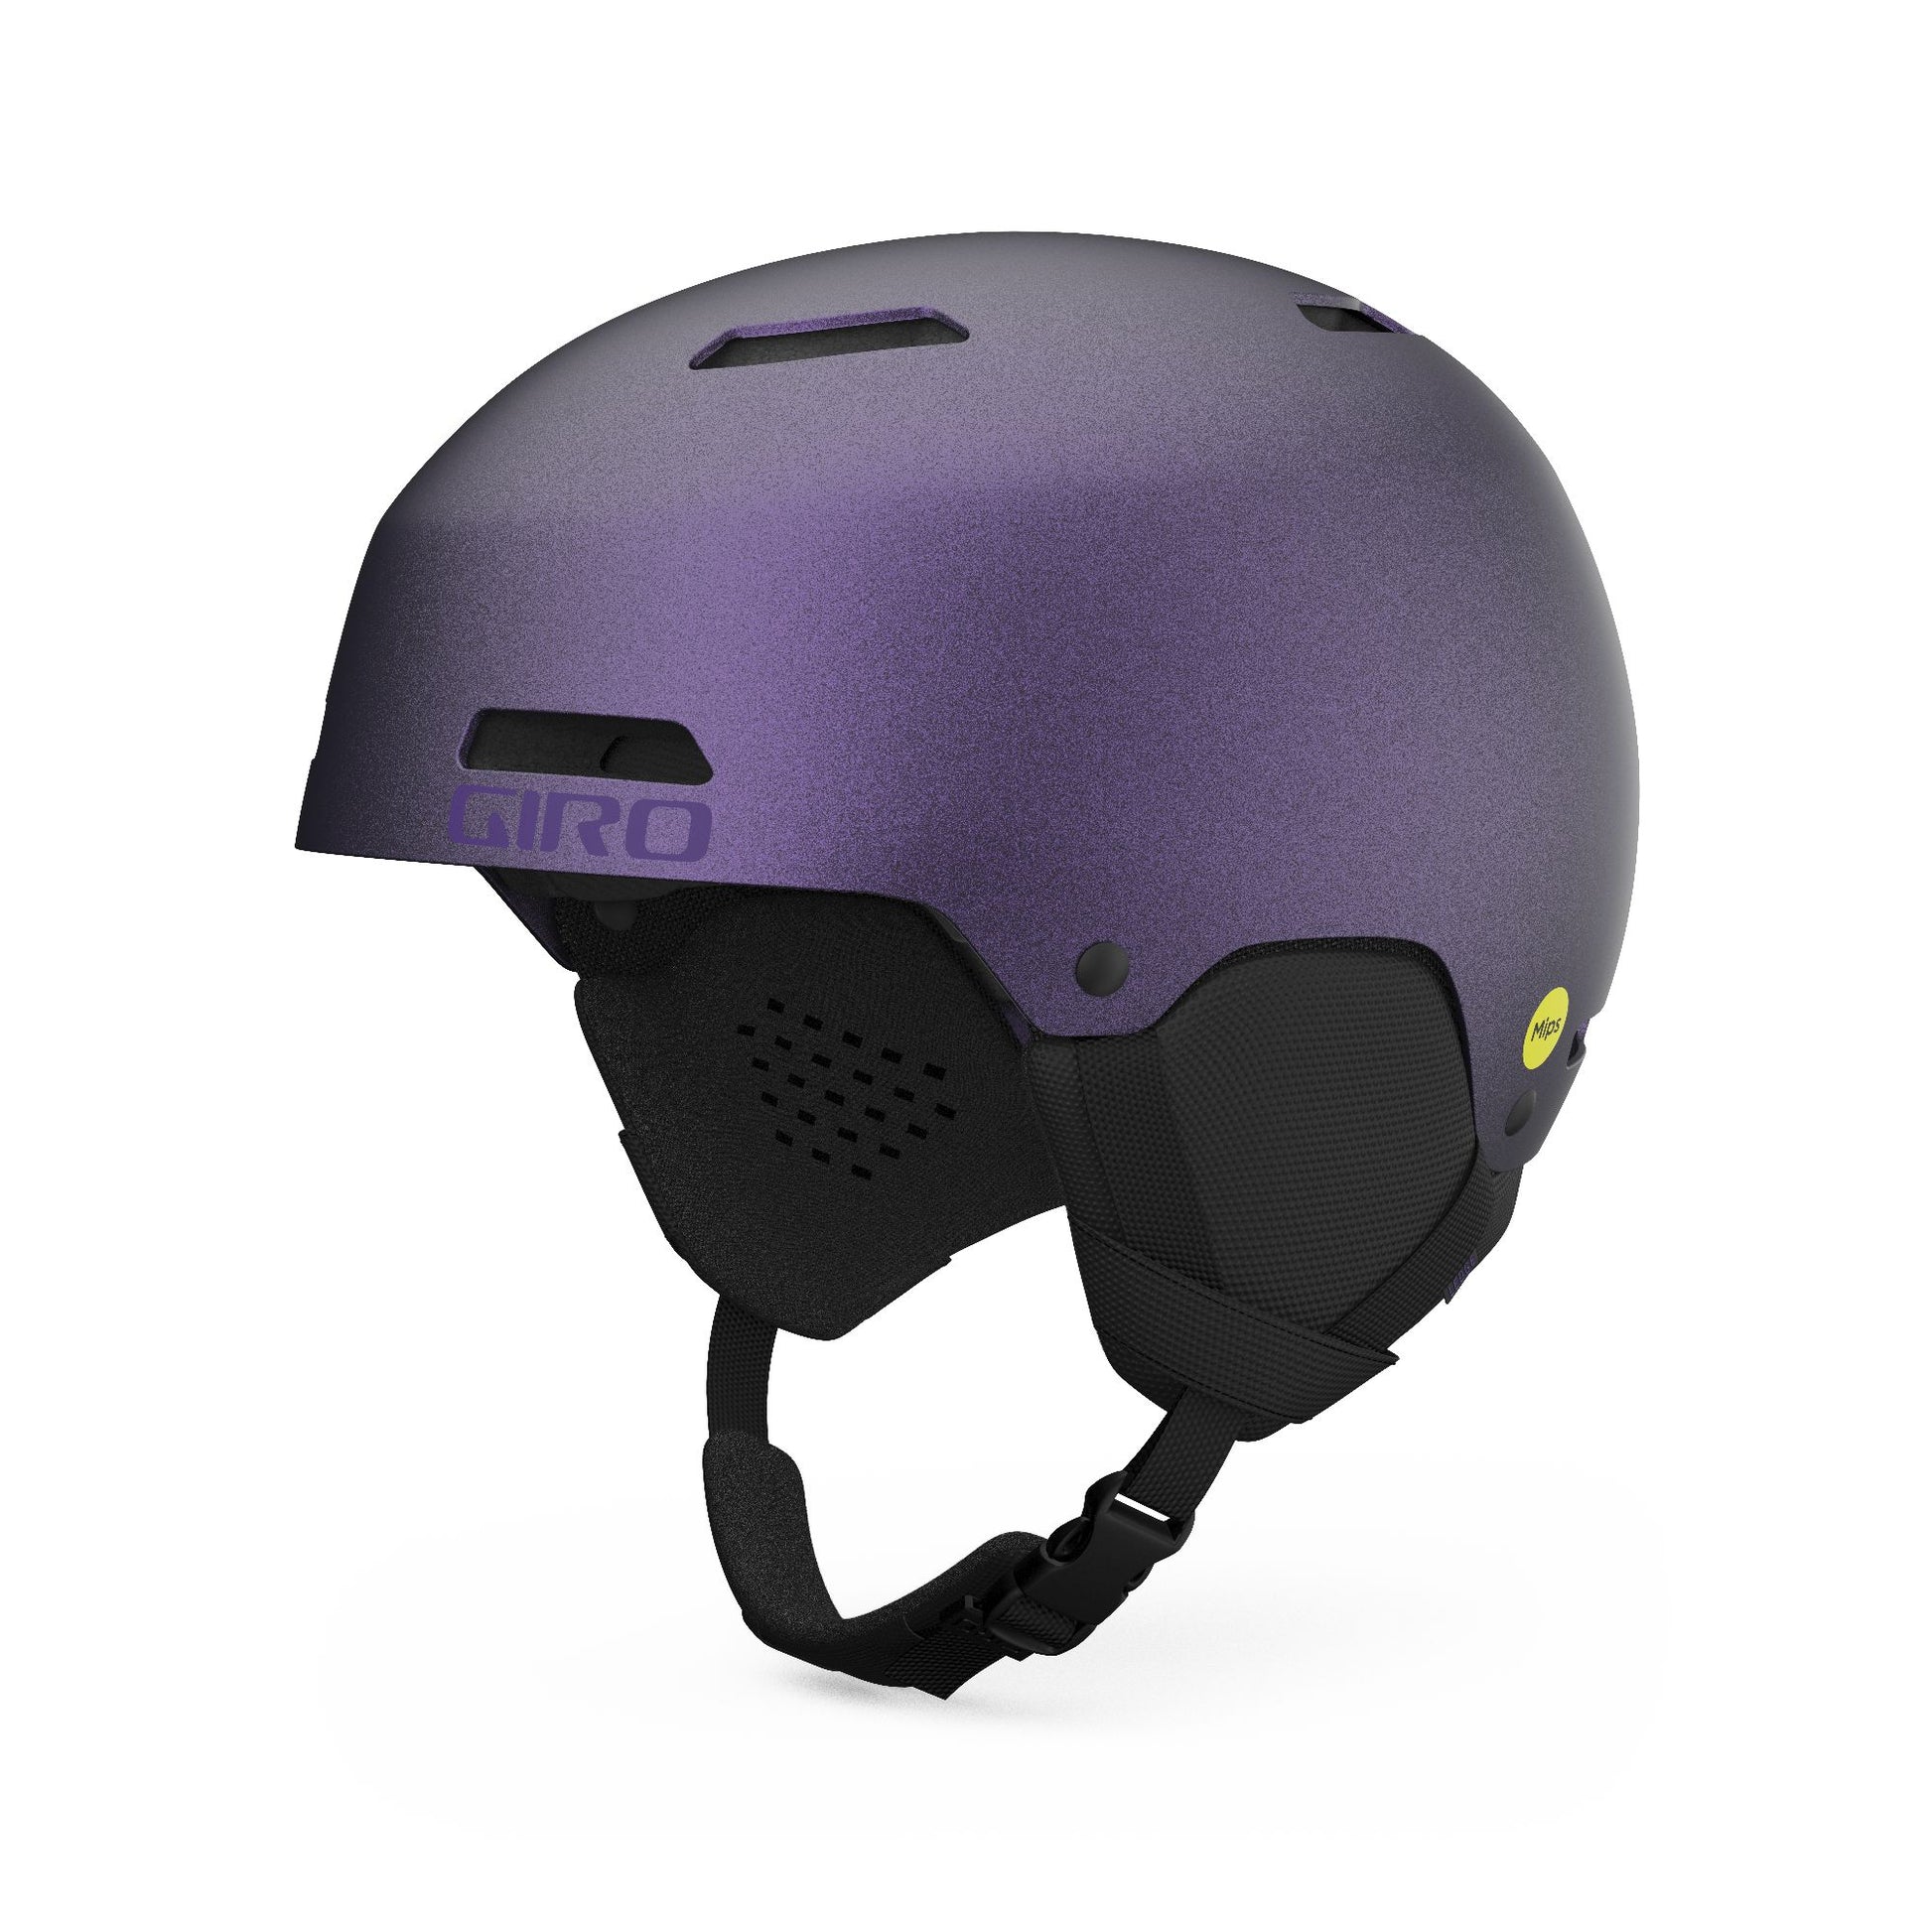 Giro Ledge MIPS Helmet Matte Black Purple Pearl Snow Helmets